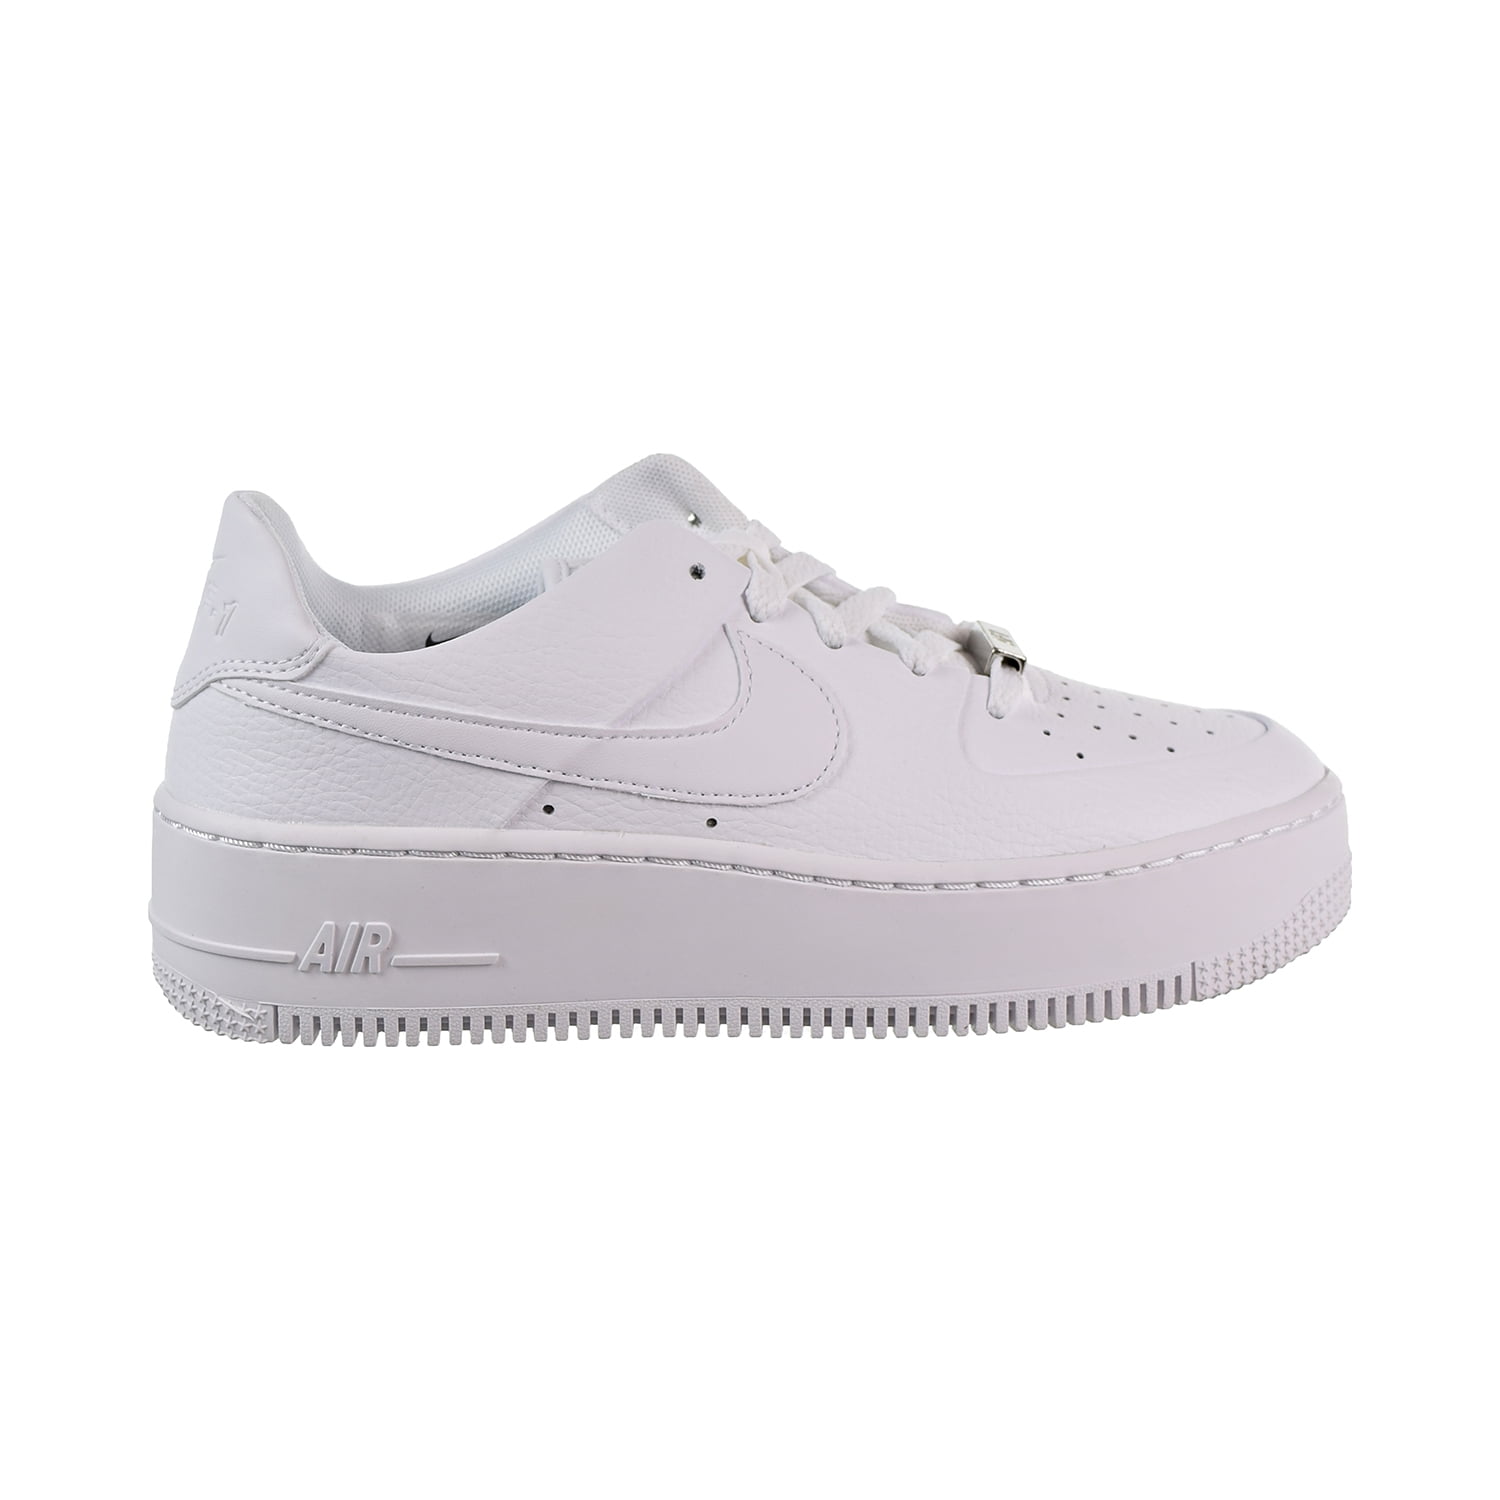 mi Hong Kong Irónico Nike Air Force 1 Sage Low Women's Shoes White/White ar5339-100 - Walmart.com